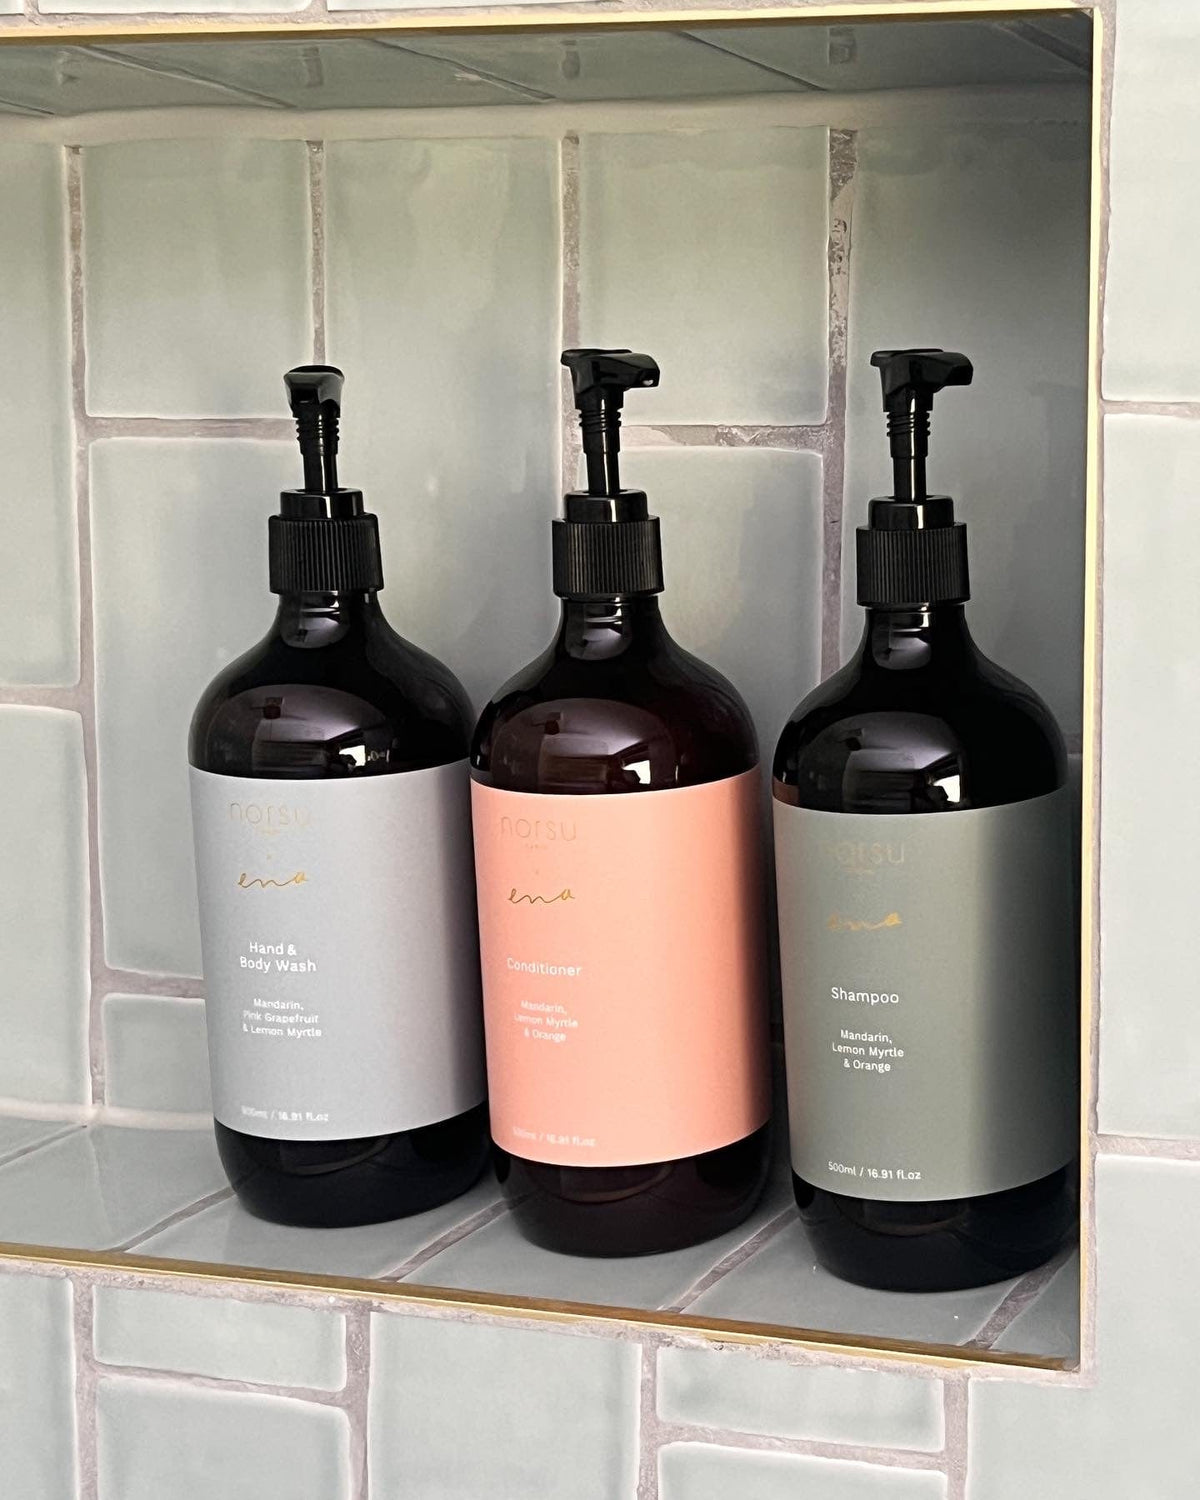 Ena Body Wash & Lotion norsu Cabin x Ena - Shampoo, Mandarin, Lemon Myrtle & Orange, 500ml